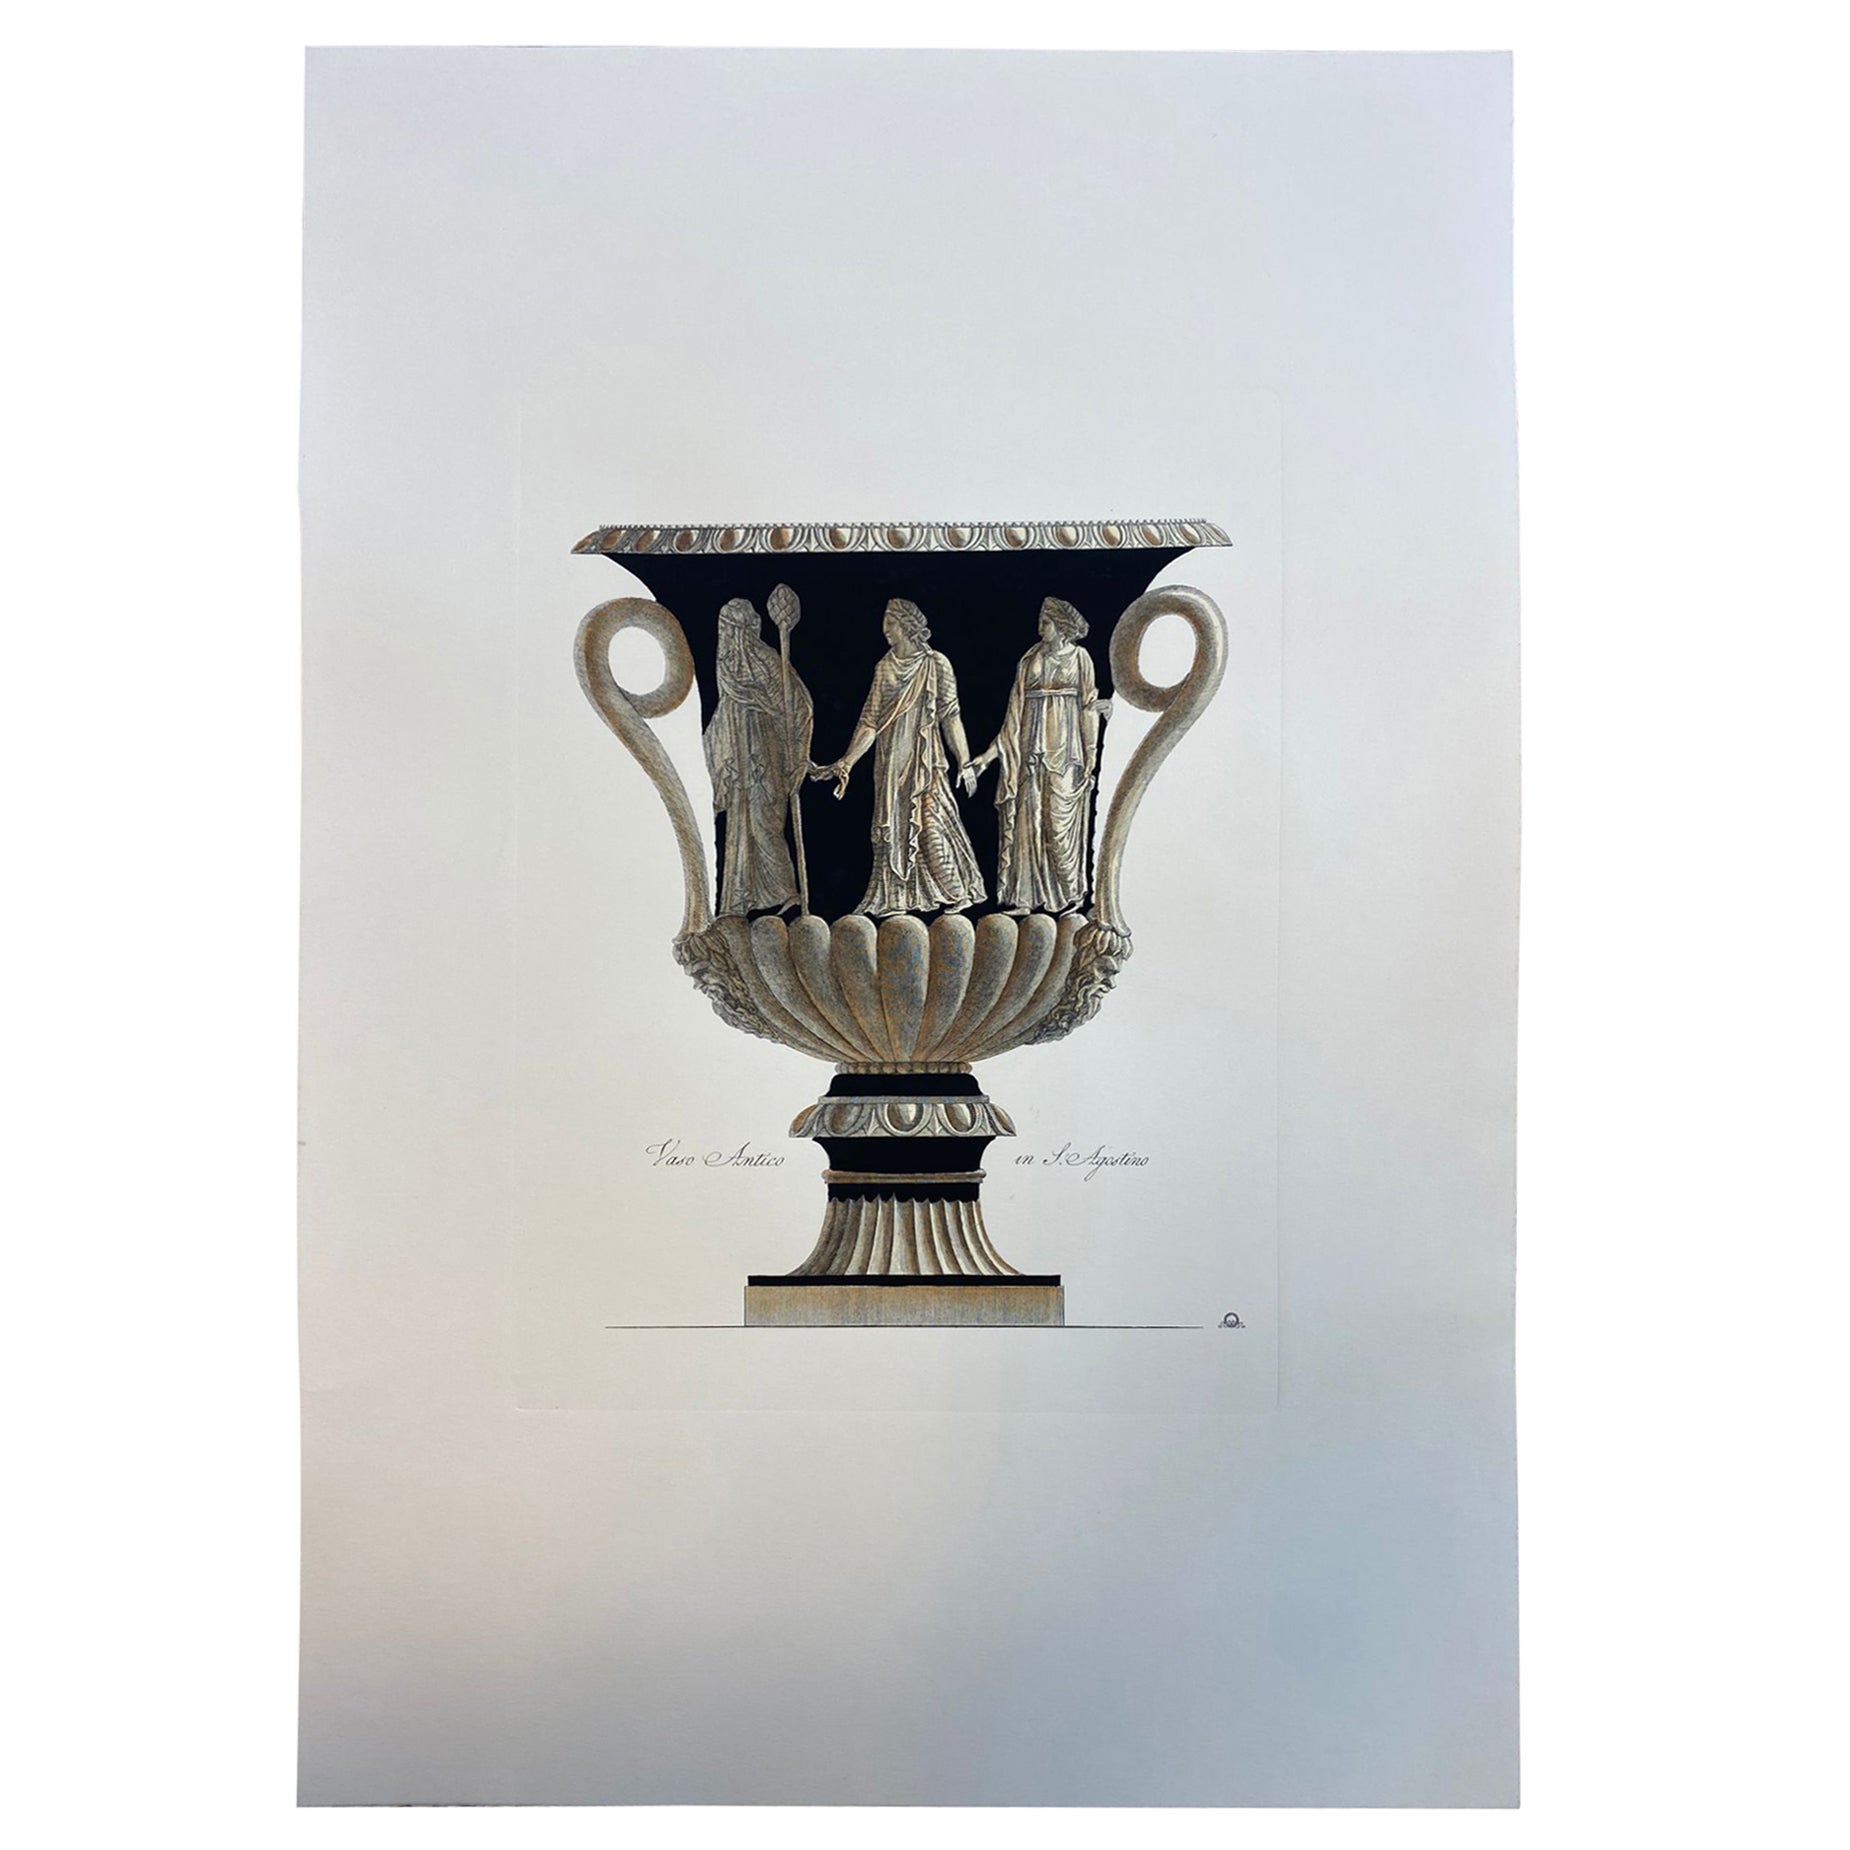 Contemporary Italian Hand Coloured Antique Roman Vase Print " in S.Agostino" For Sale